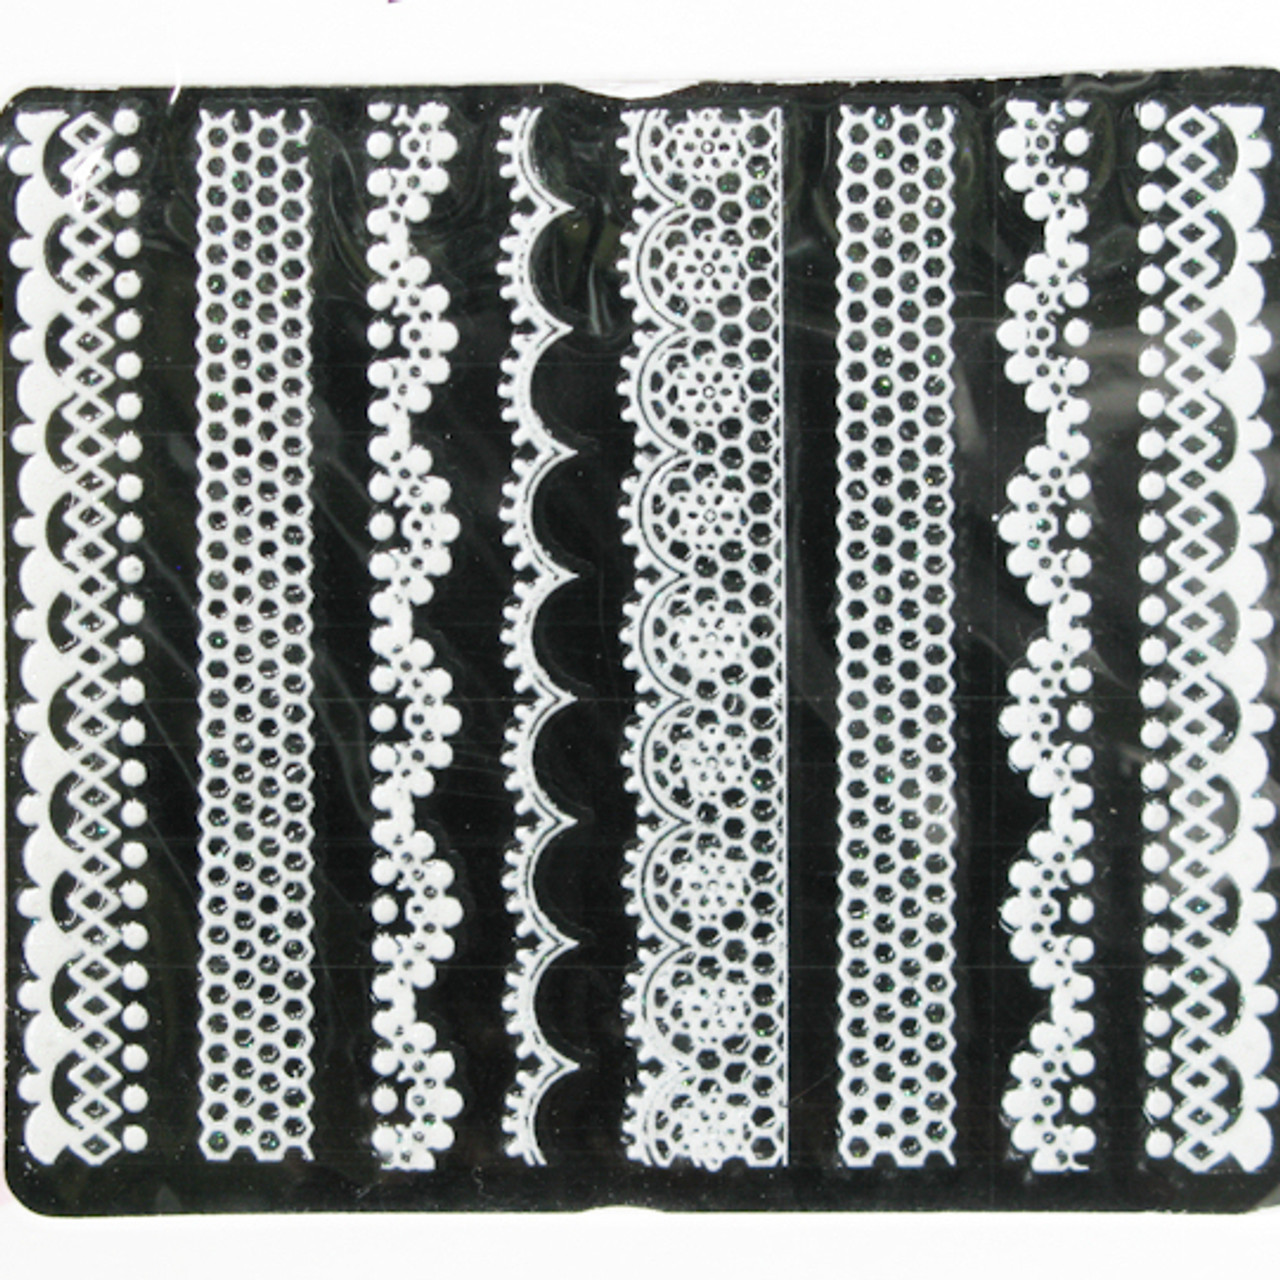 Alkalo alkalo 6 rolls lace washi tape cutout lace stickers white black